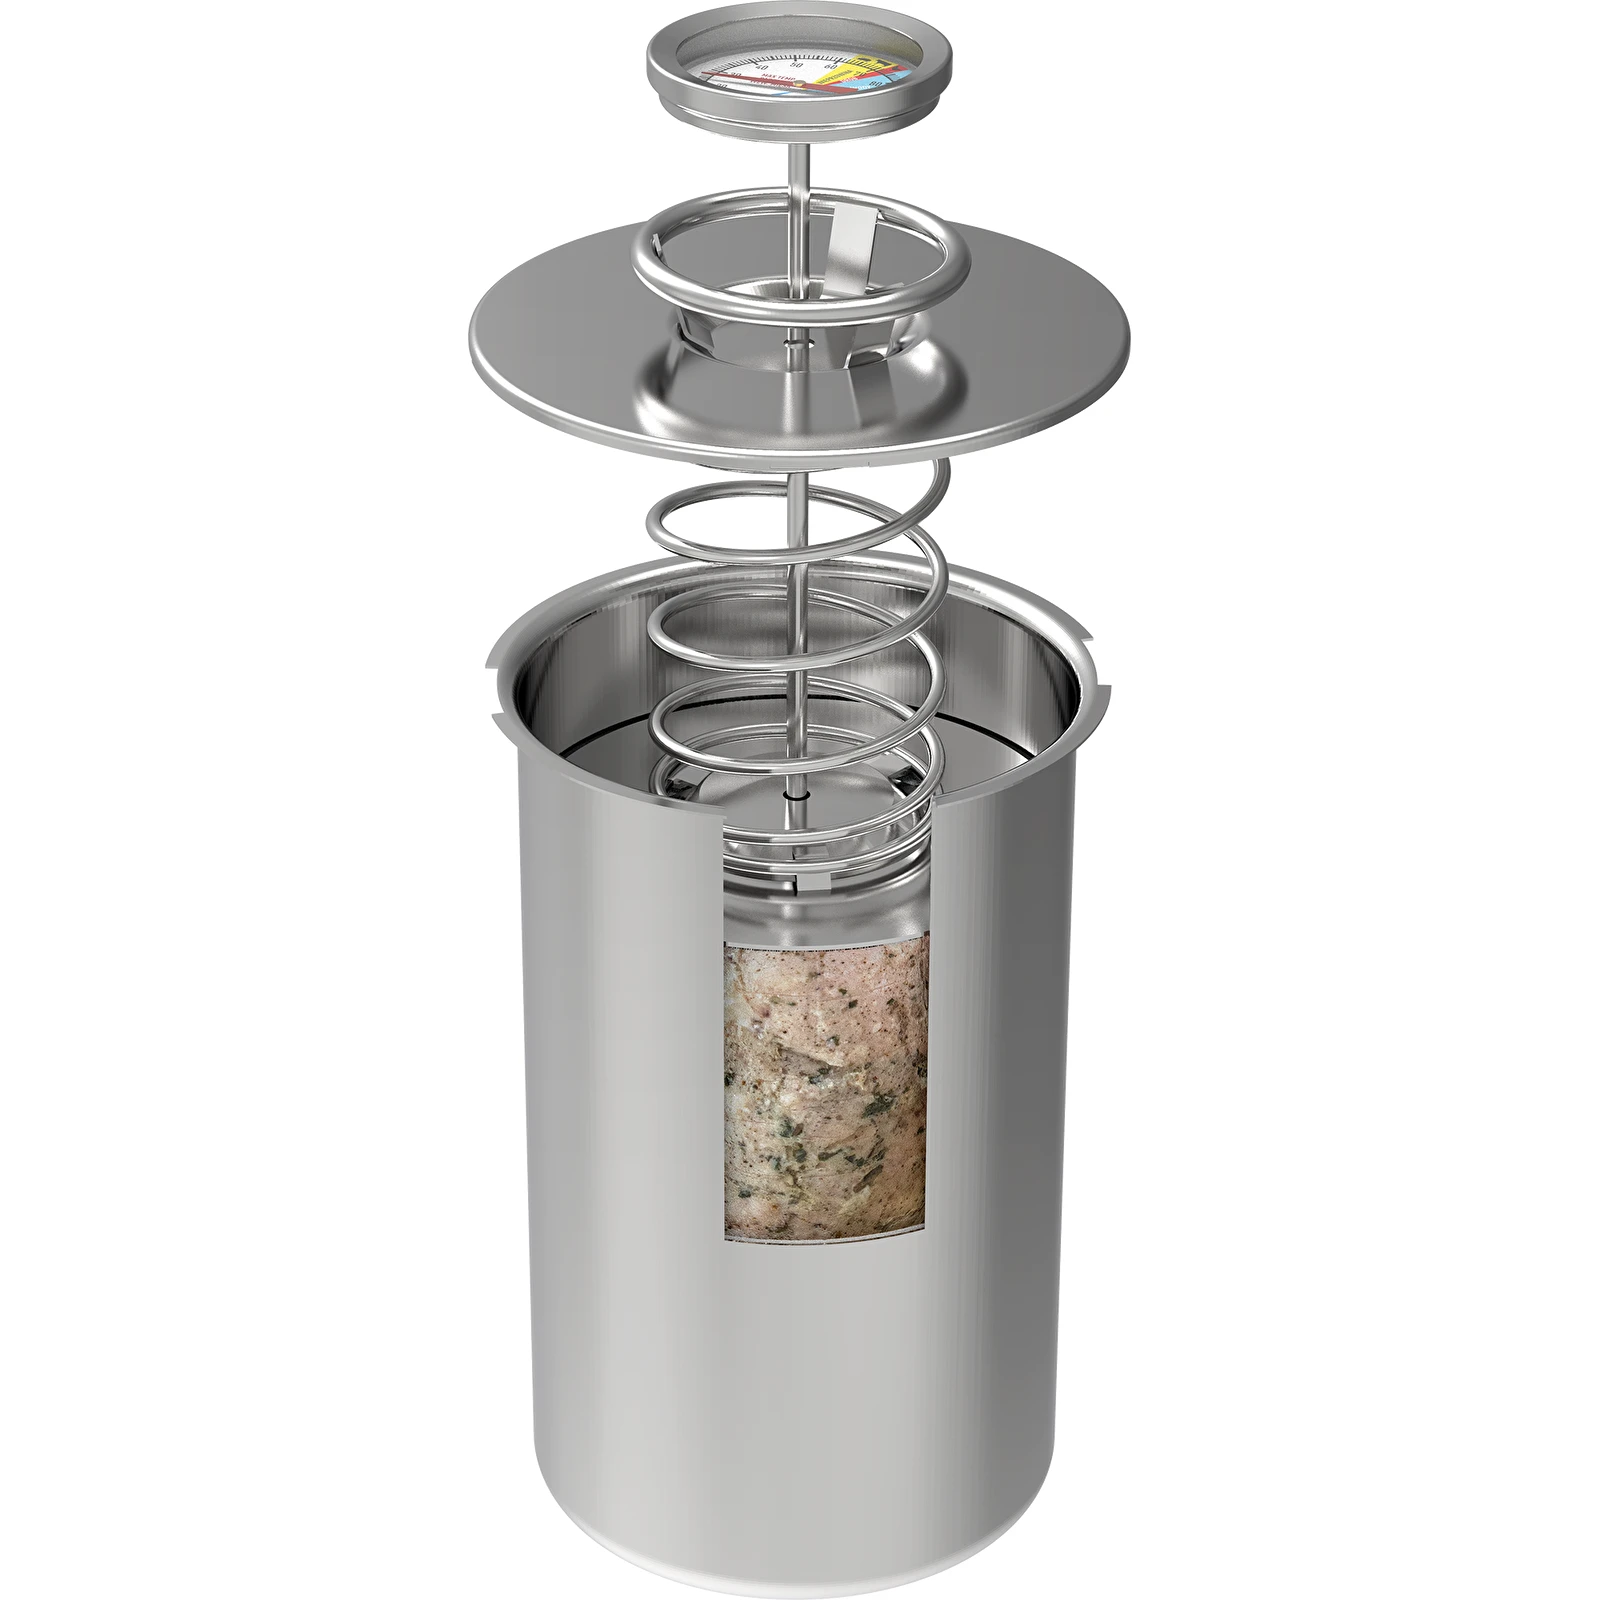 https://browin.com/static/images/1600/set-stainless-steel-press-ham-maker-pressure-ham-cooker-1-5-kg-with-accessories-313015_e.webp